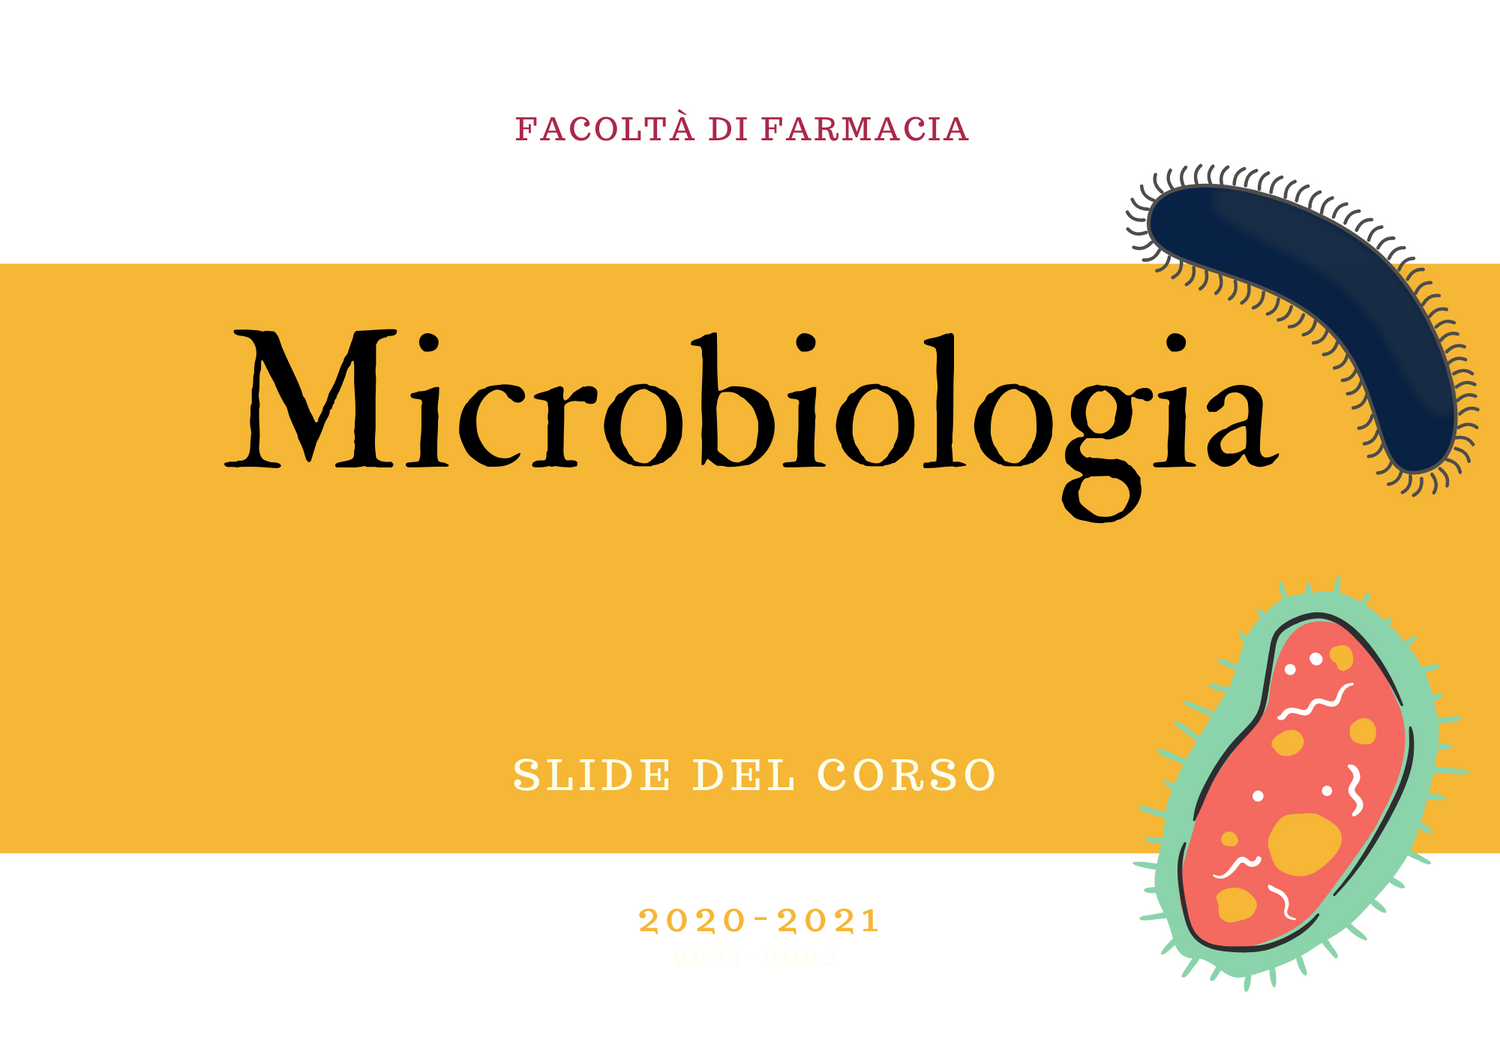 Microbiologia - Slide - Farmacia